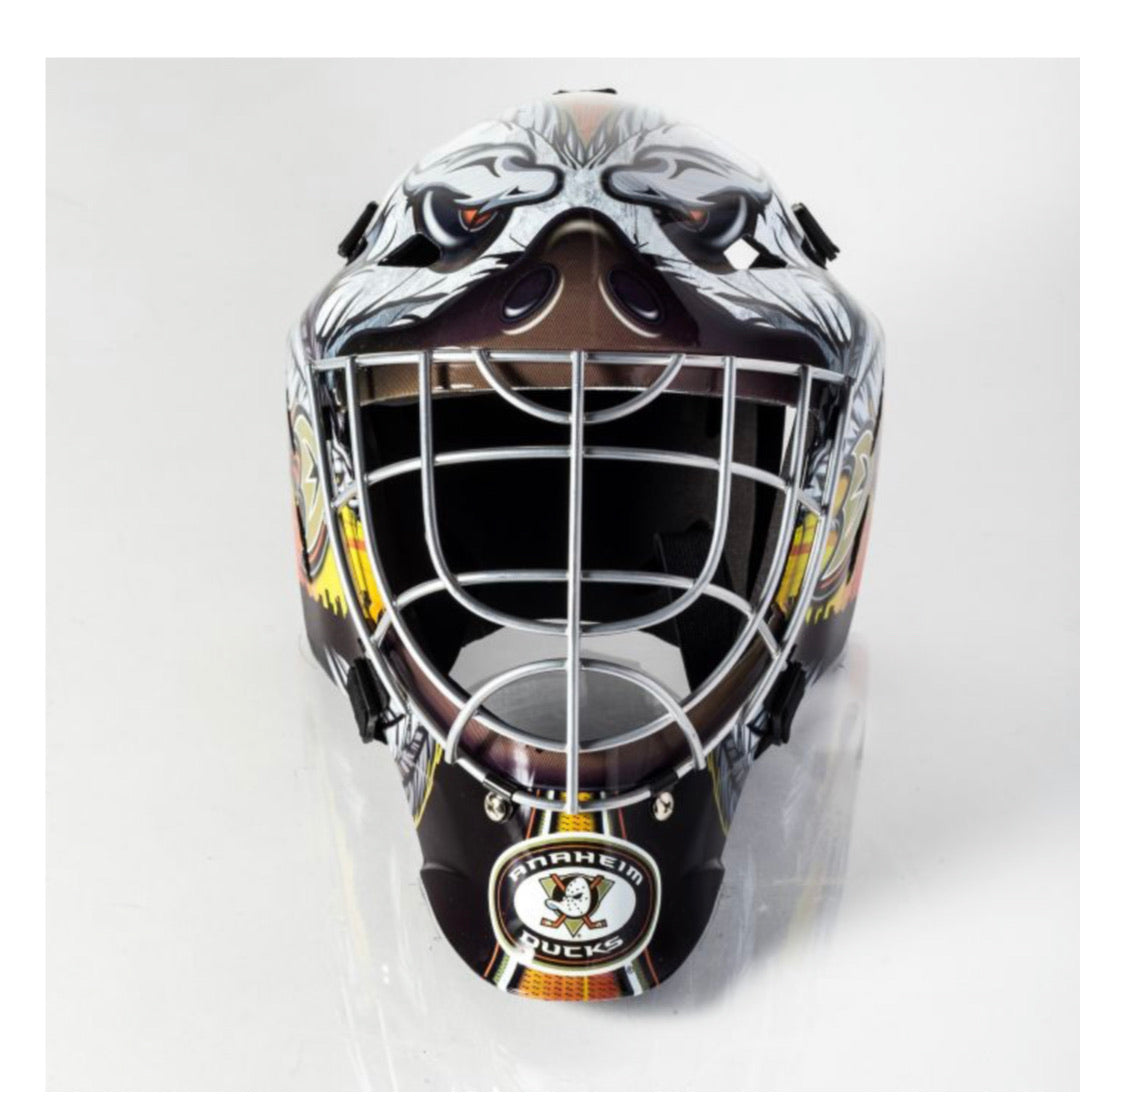 Anaheim Ducks Franklin GFM 1500: NHL® Team Goalie  Helmet - AtlanticCoastSports